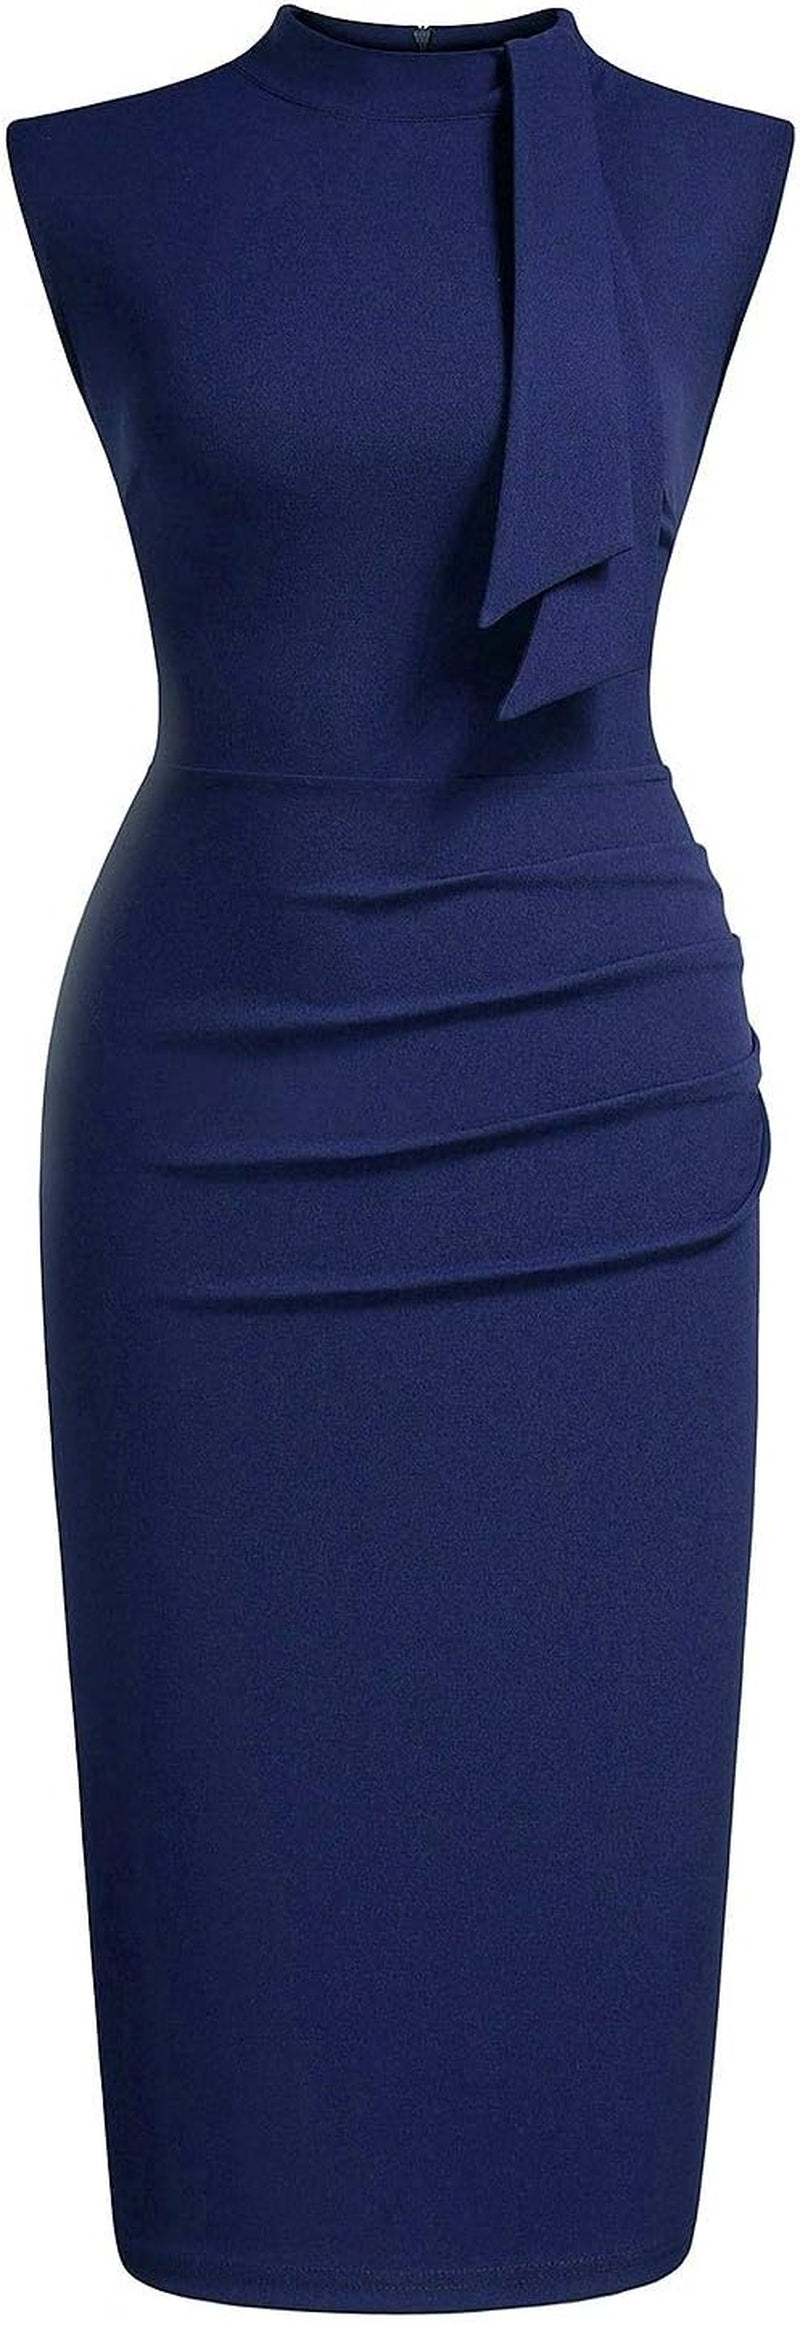 Women's Retro Style Half Collar Ruffle Cocktail Pencil Dress